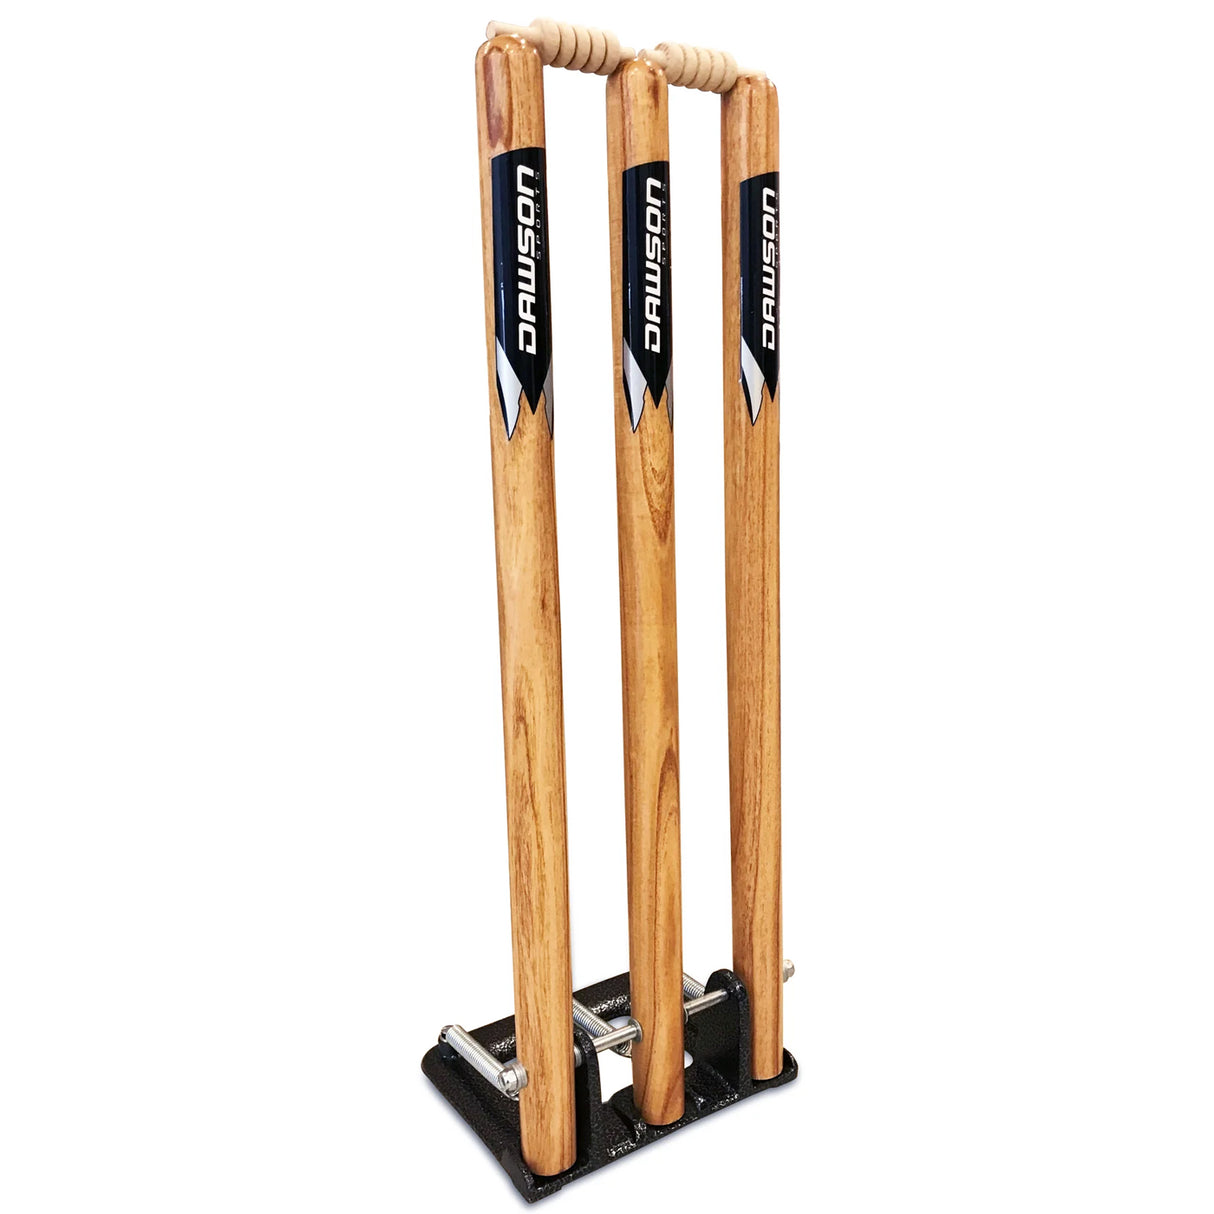 DS Wooden Spring Stump Set - Premium